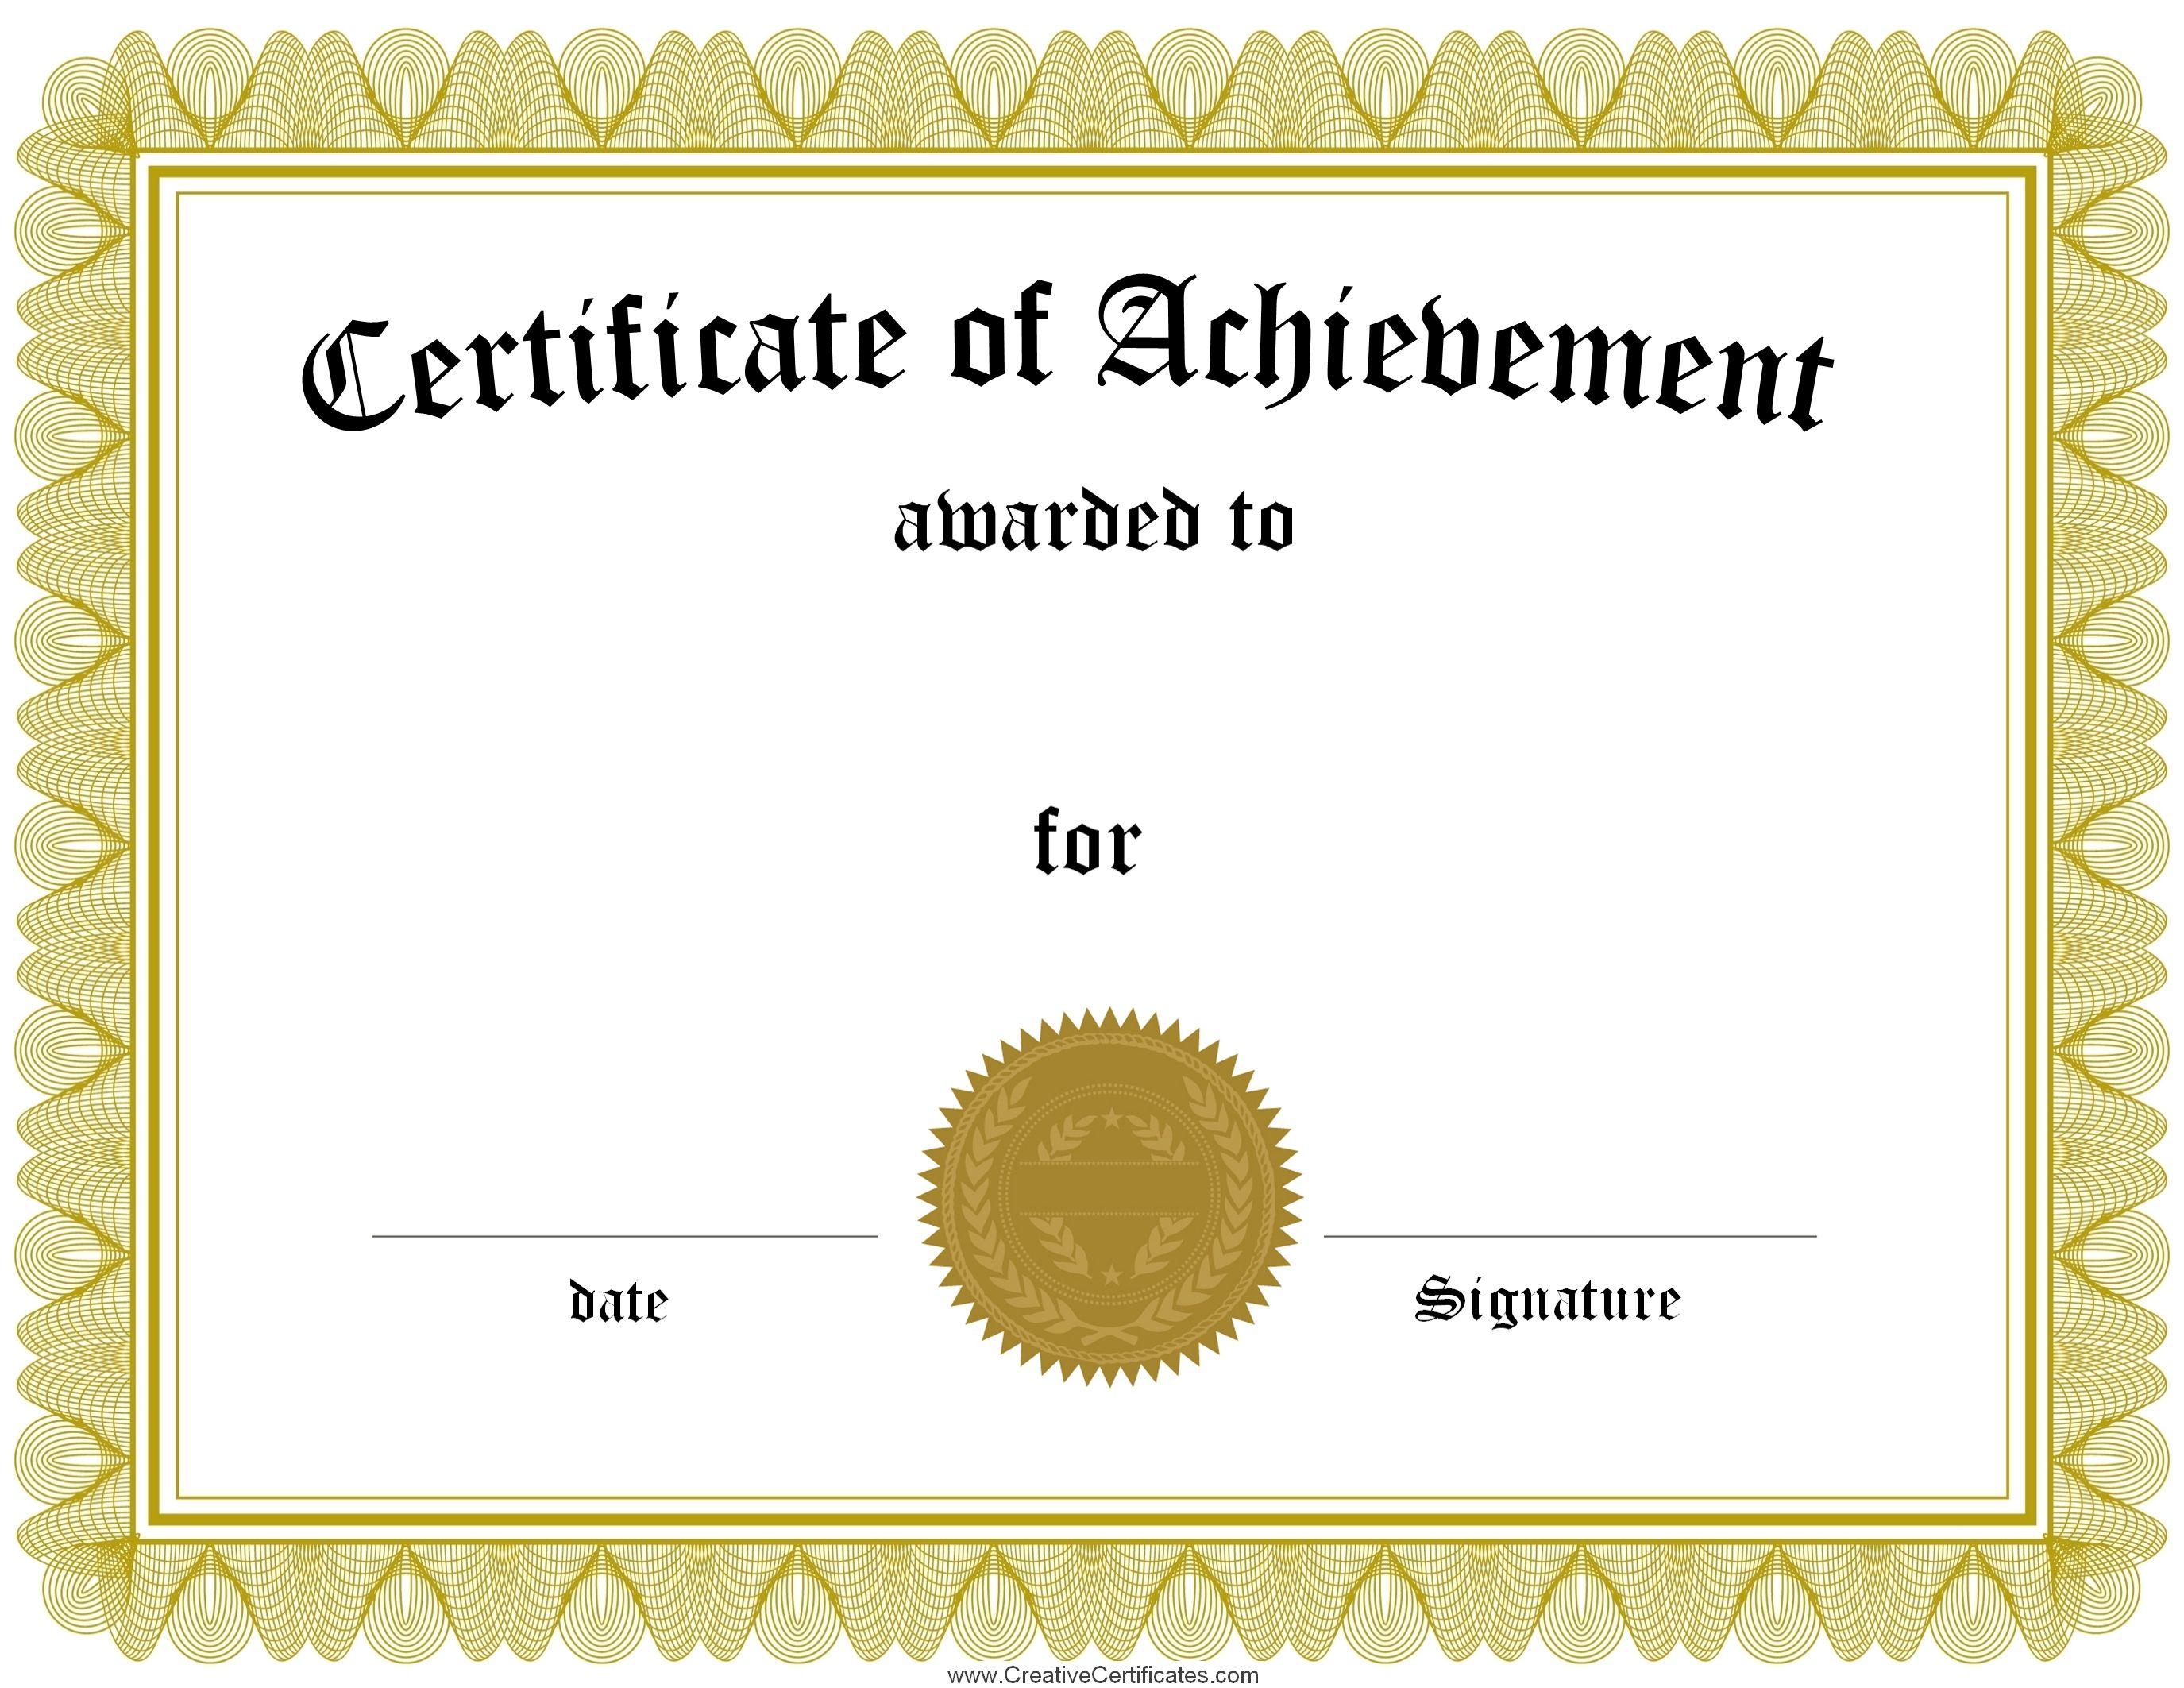 Award Certificate certificate best free image